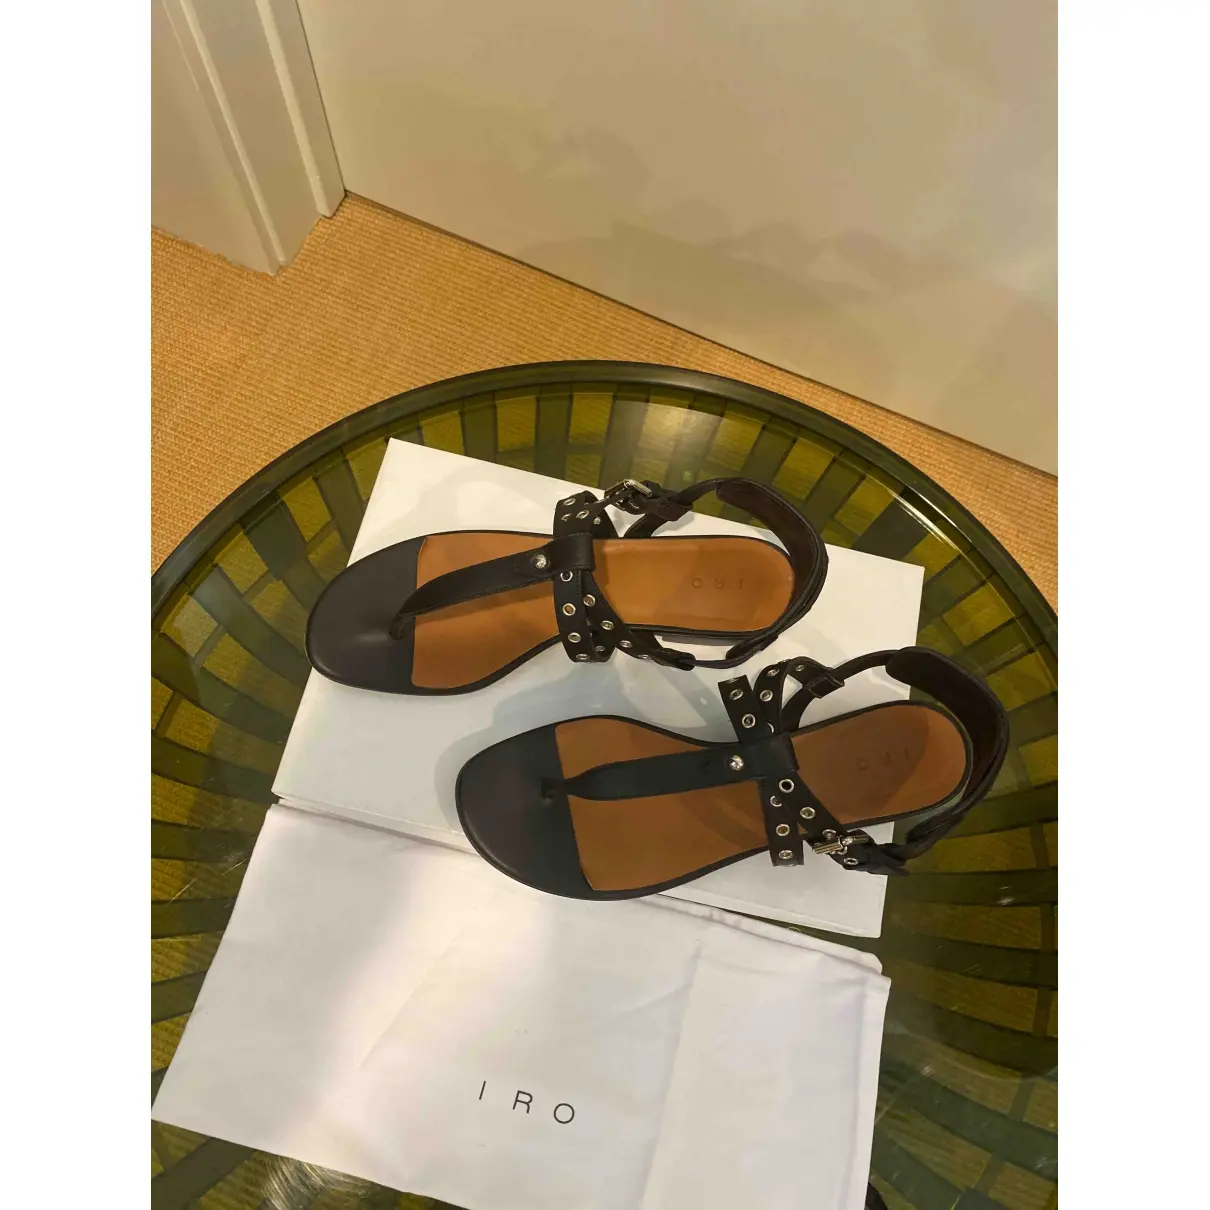 Buy Iro Leather sandal online